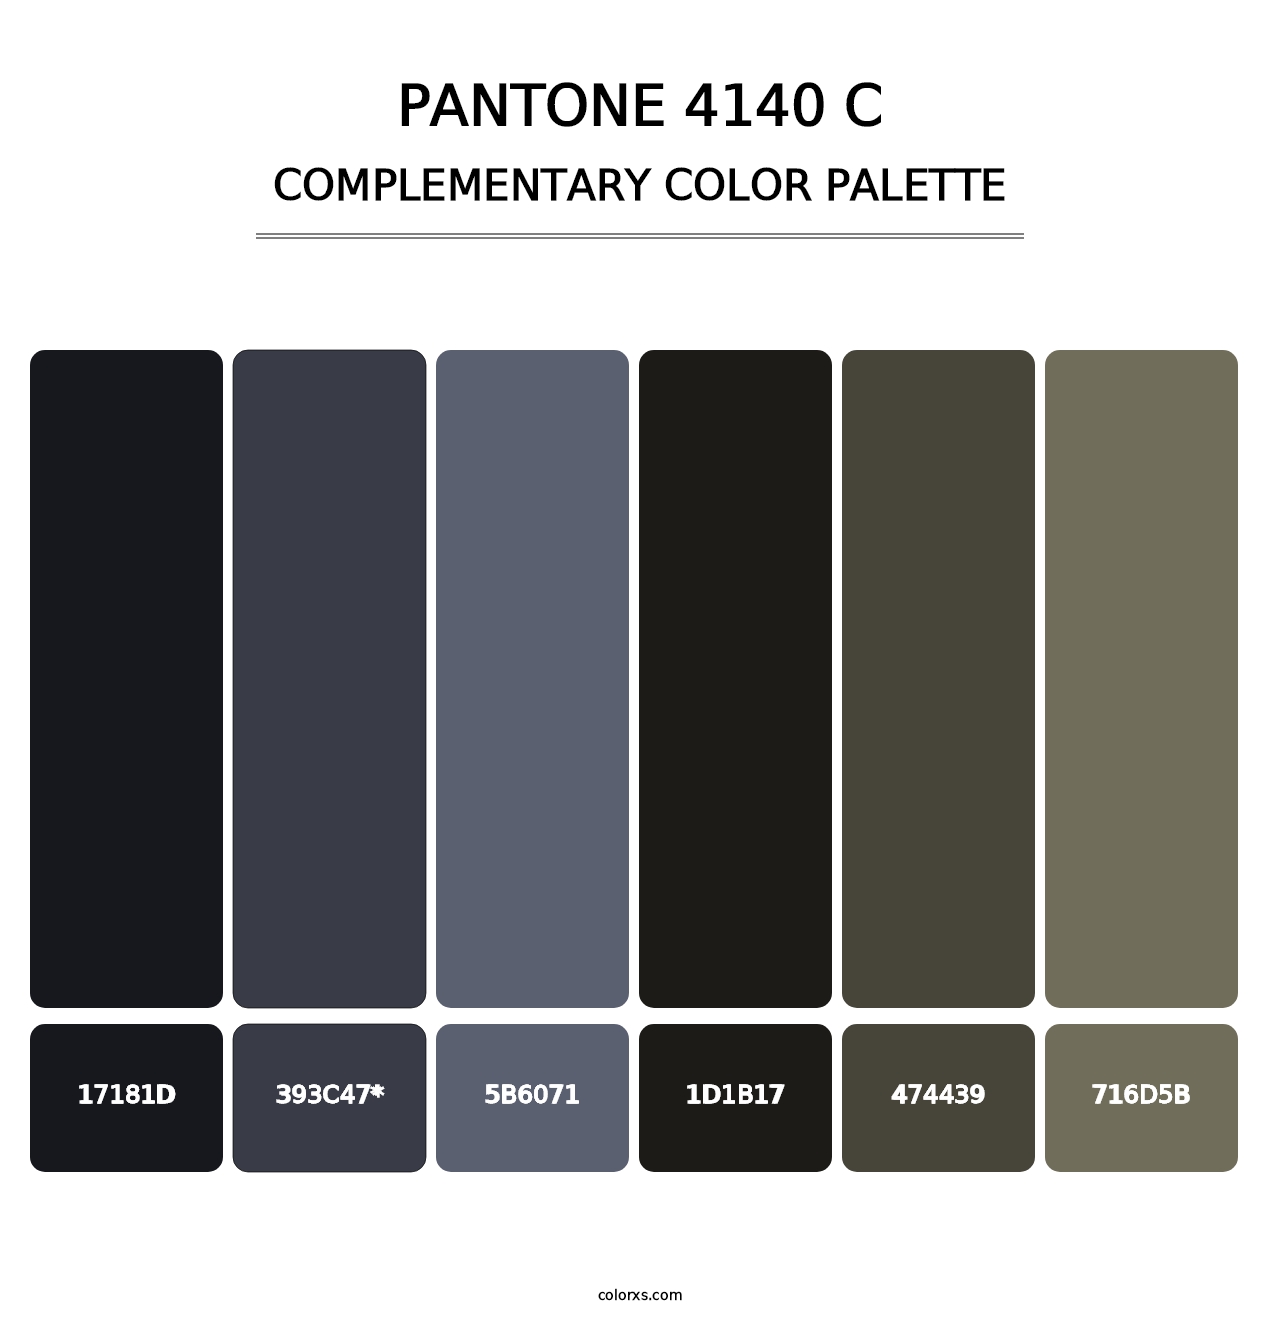 PANTONE 4140 C - Complementary Color Palette